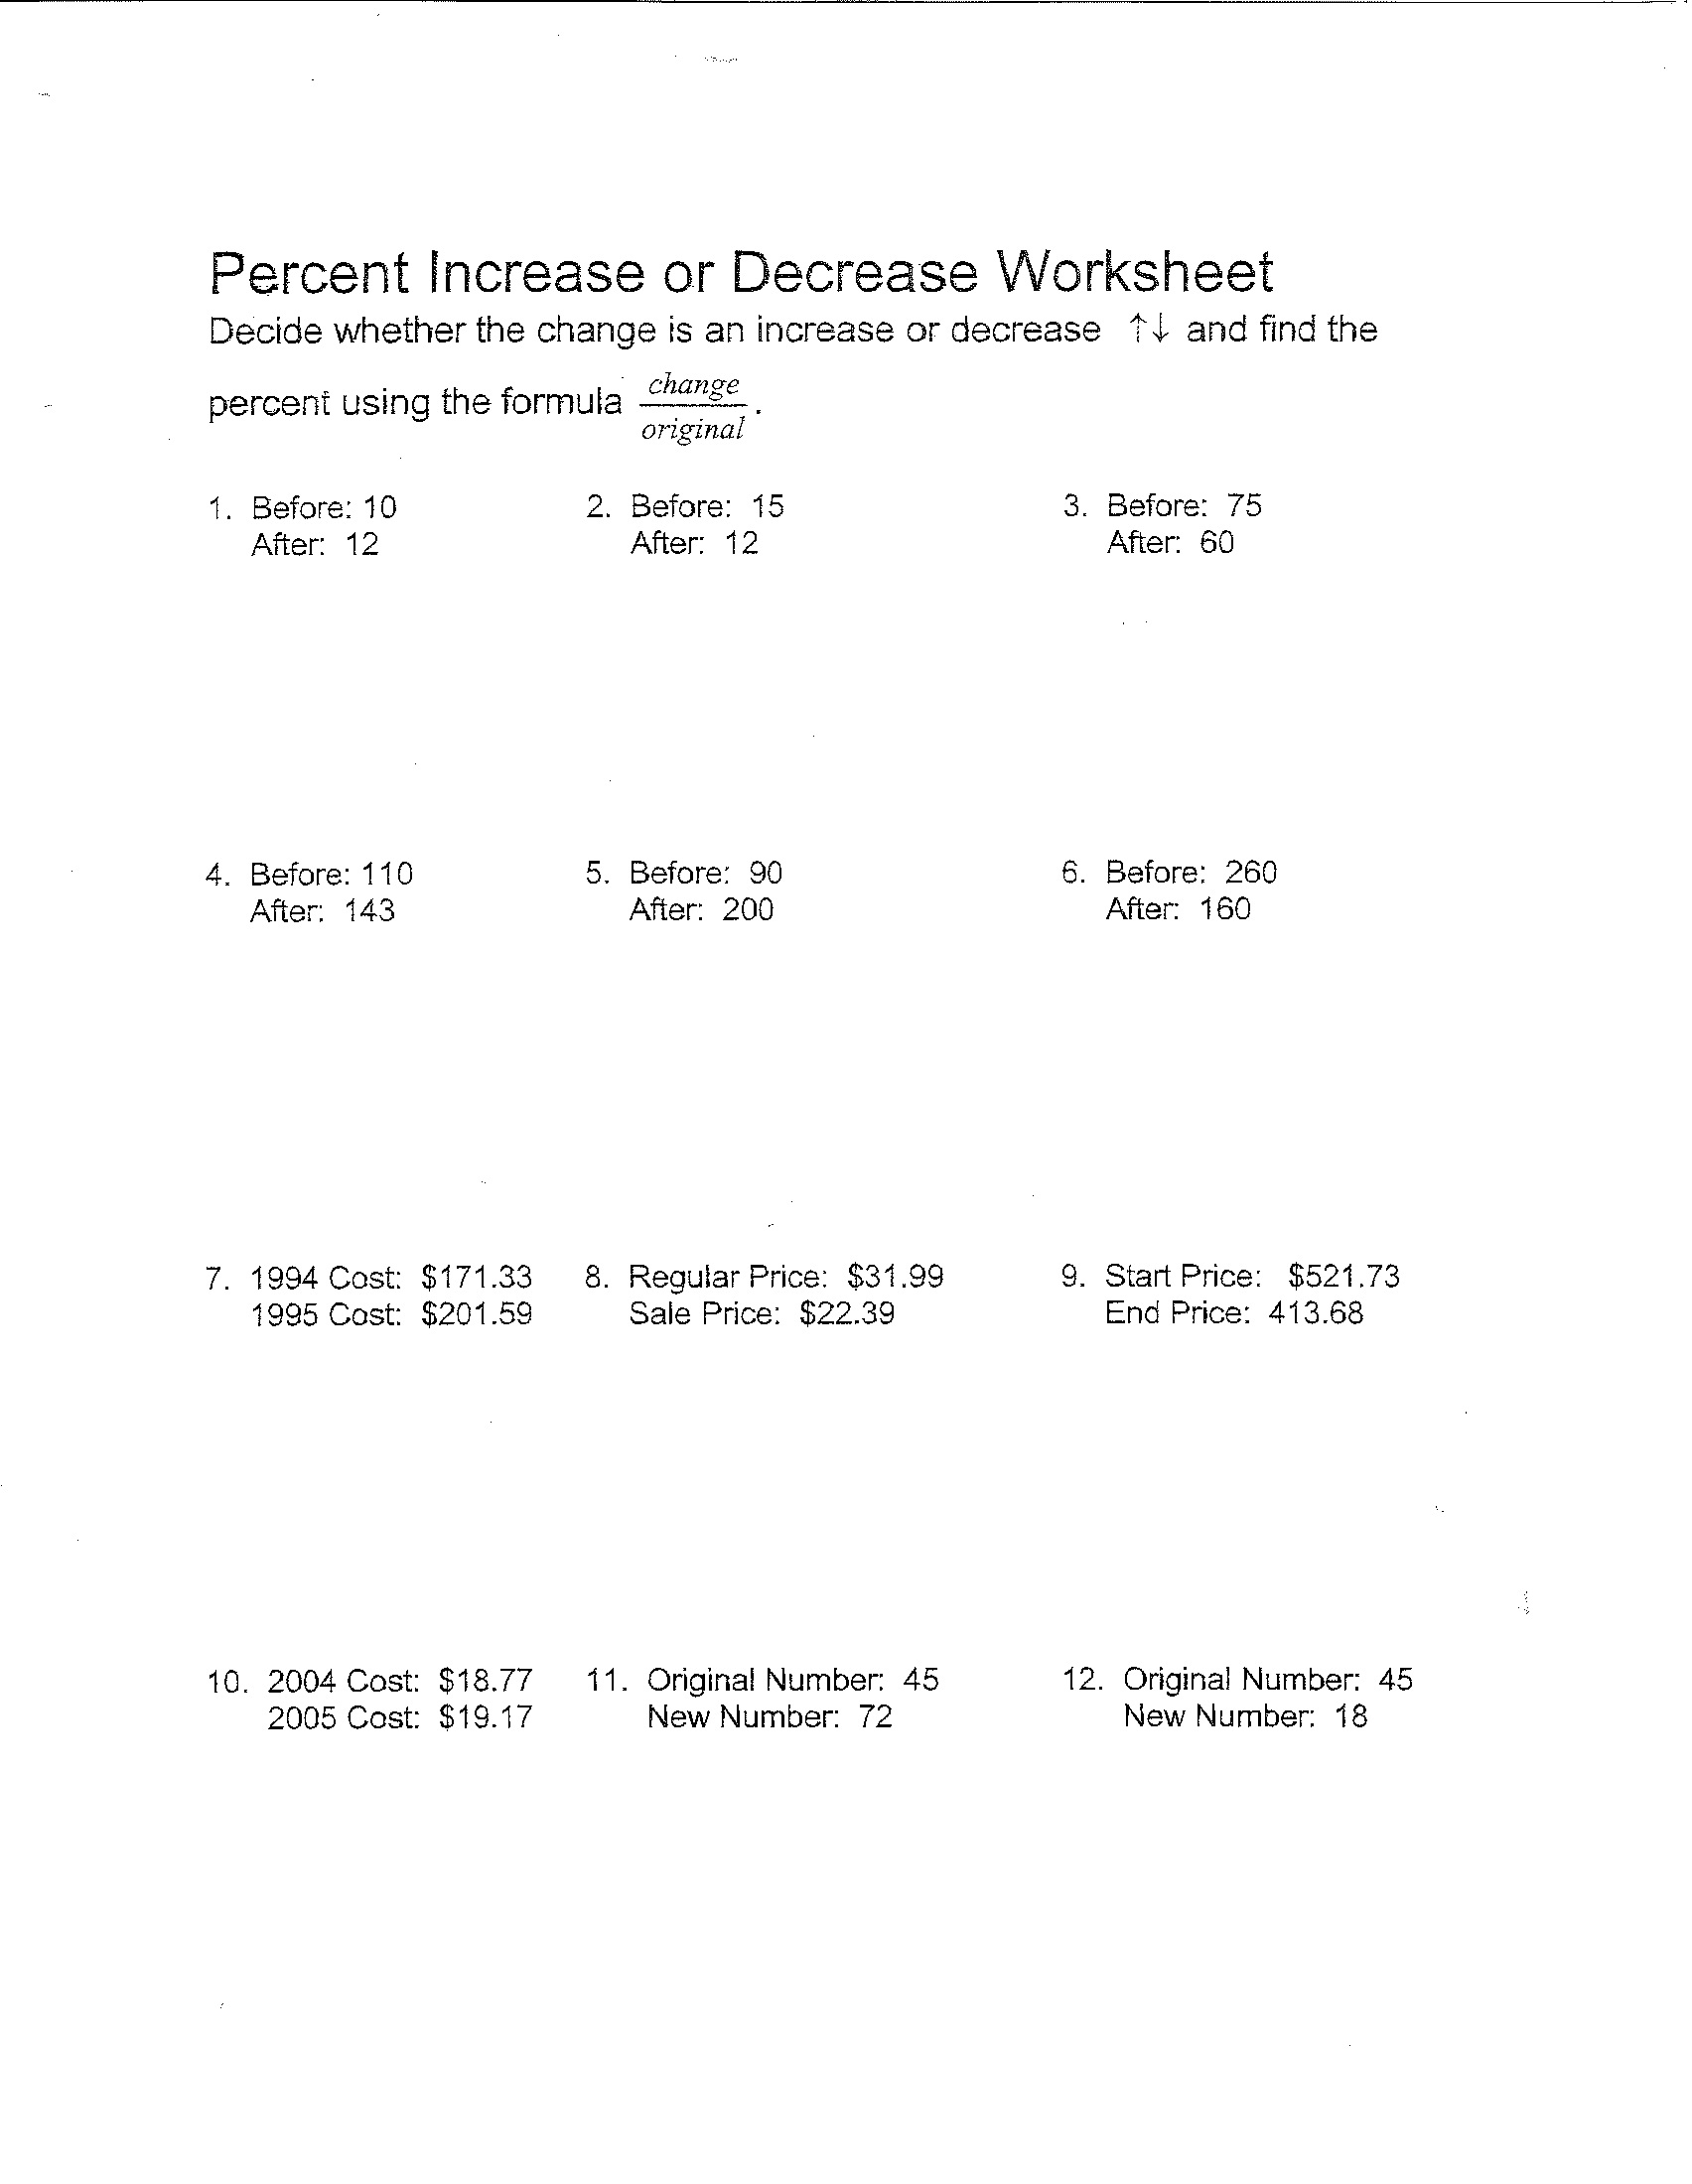 Percent Increase or Decrease Worksheet Image